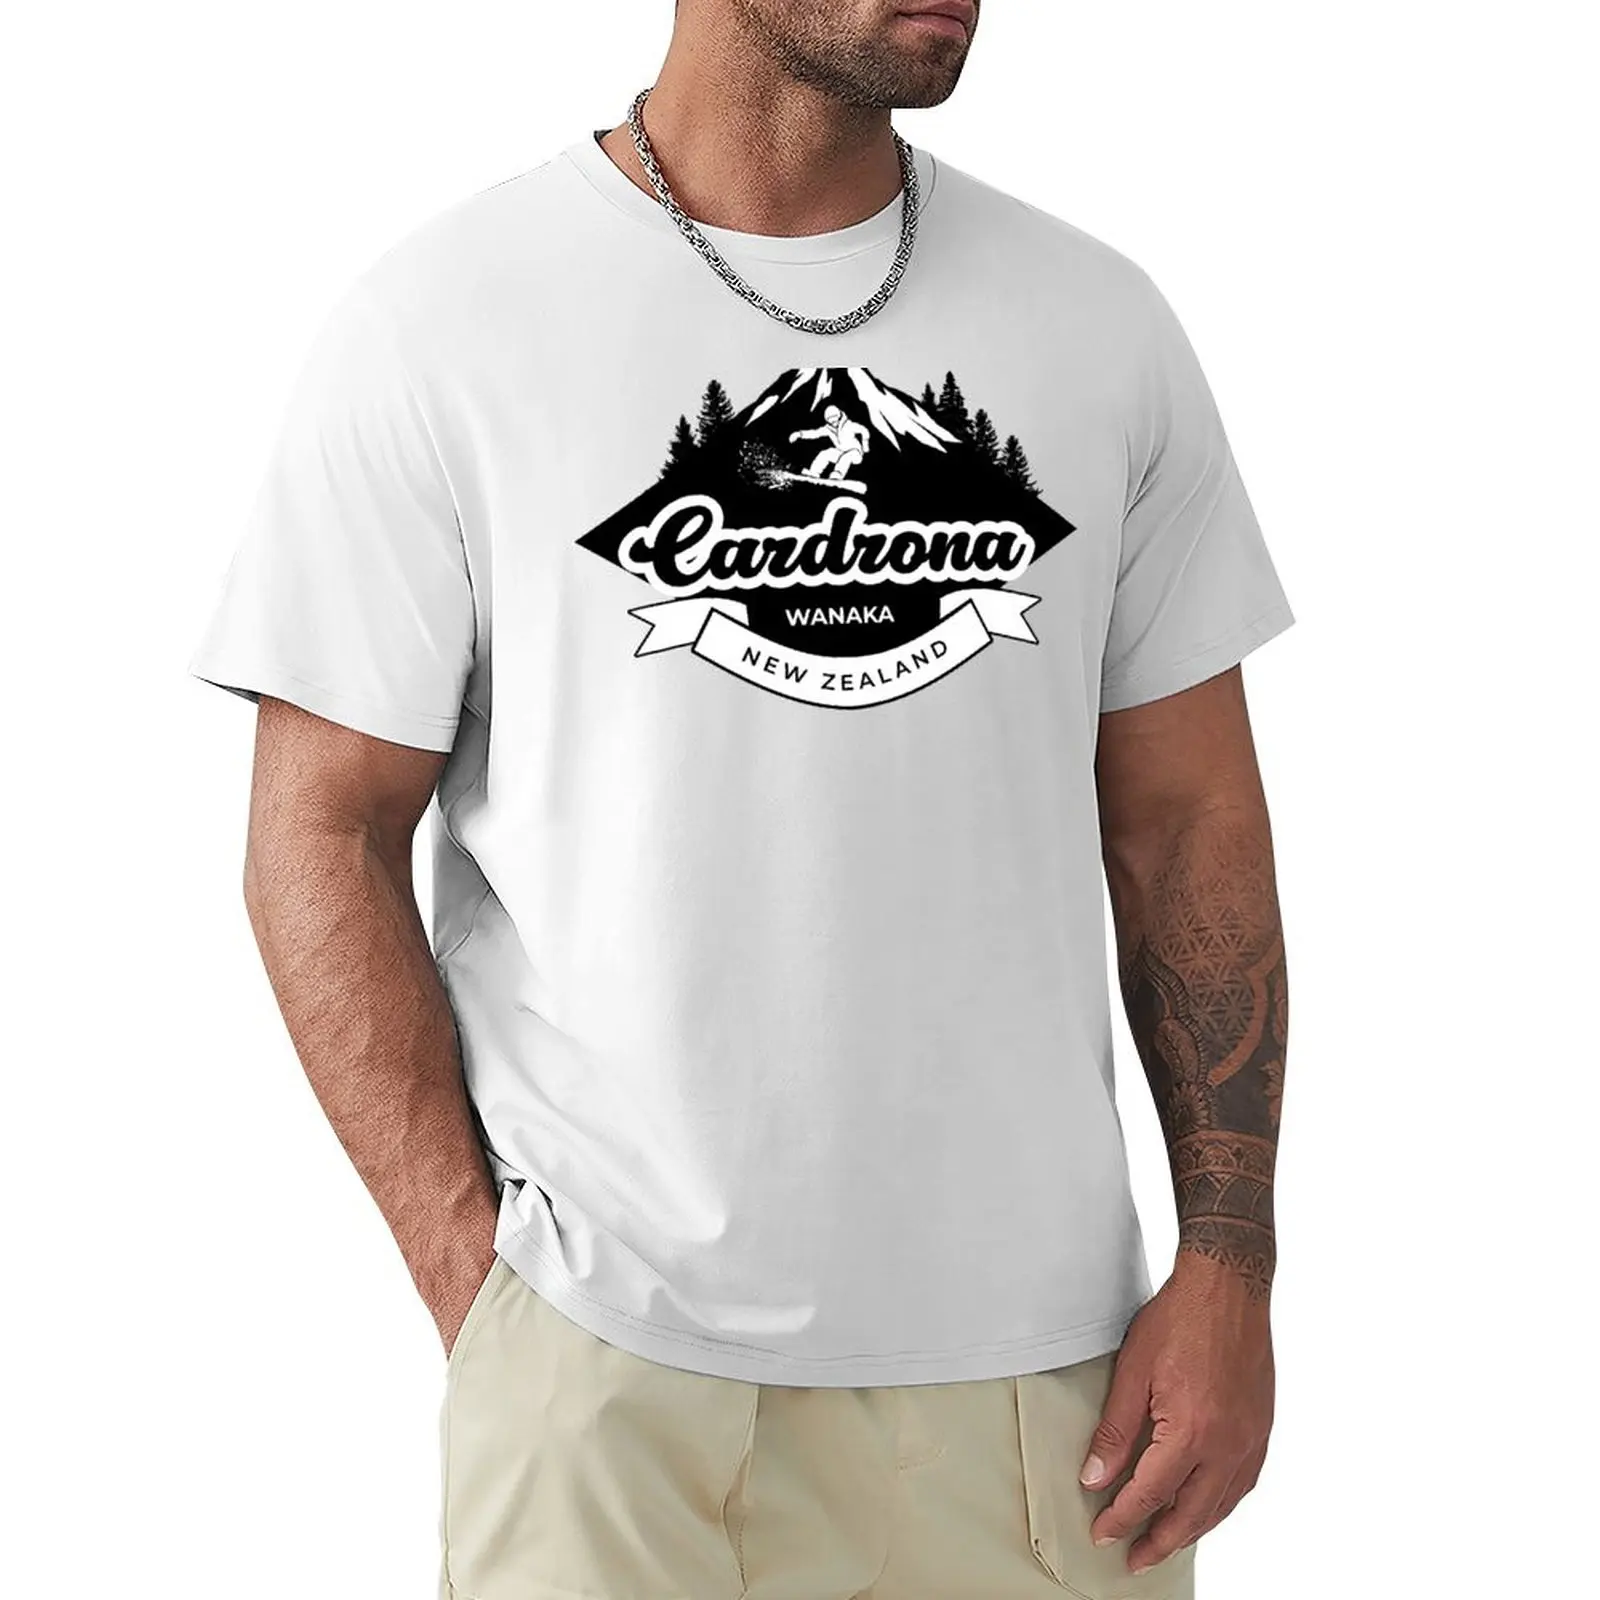 

Cardrona, Wanaka, New Zealand T-Shirt customs animal prinfor boys oversizeds mens t shirt graphic